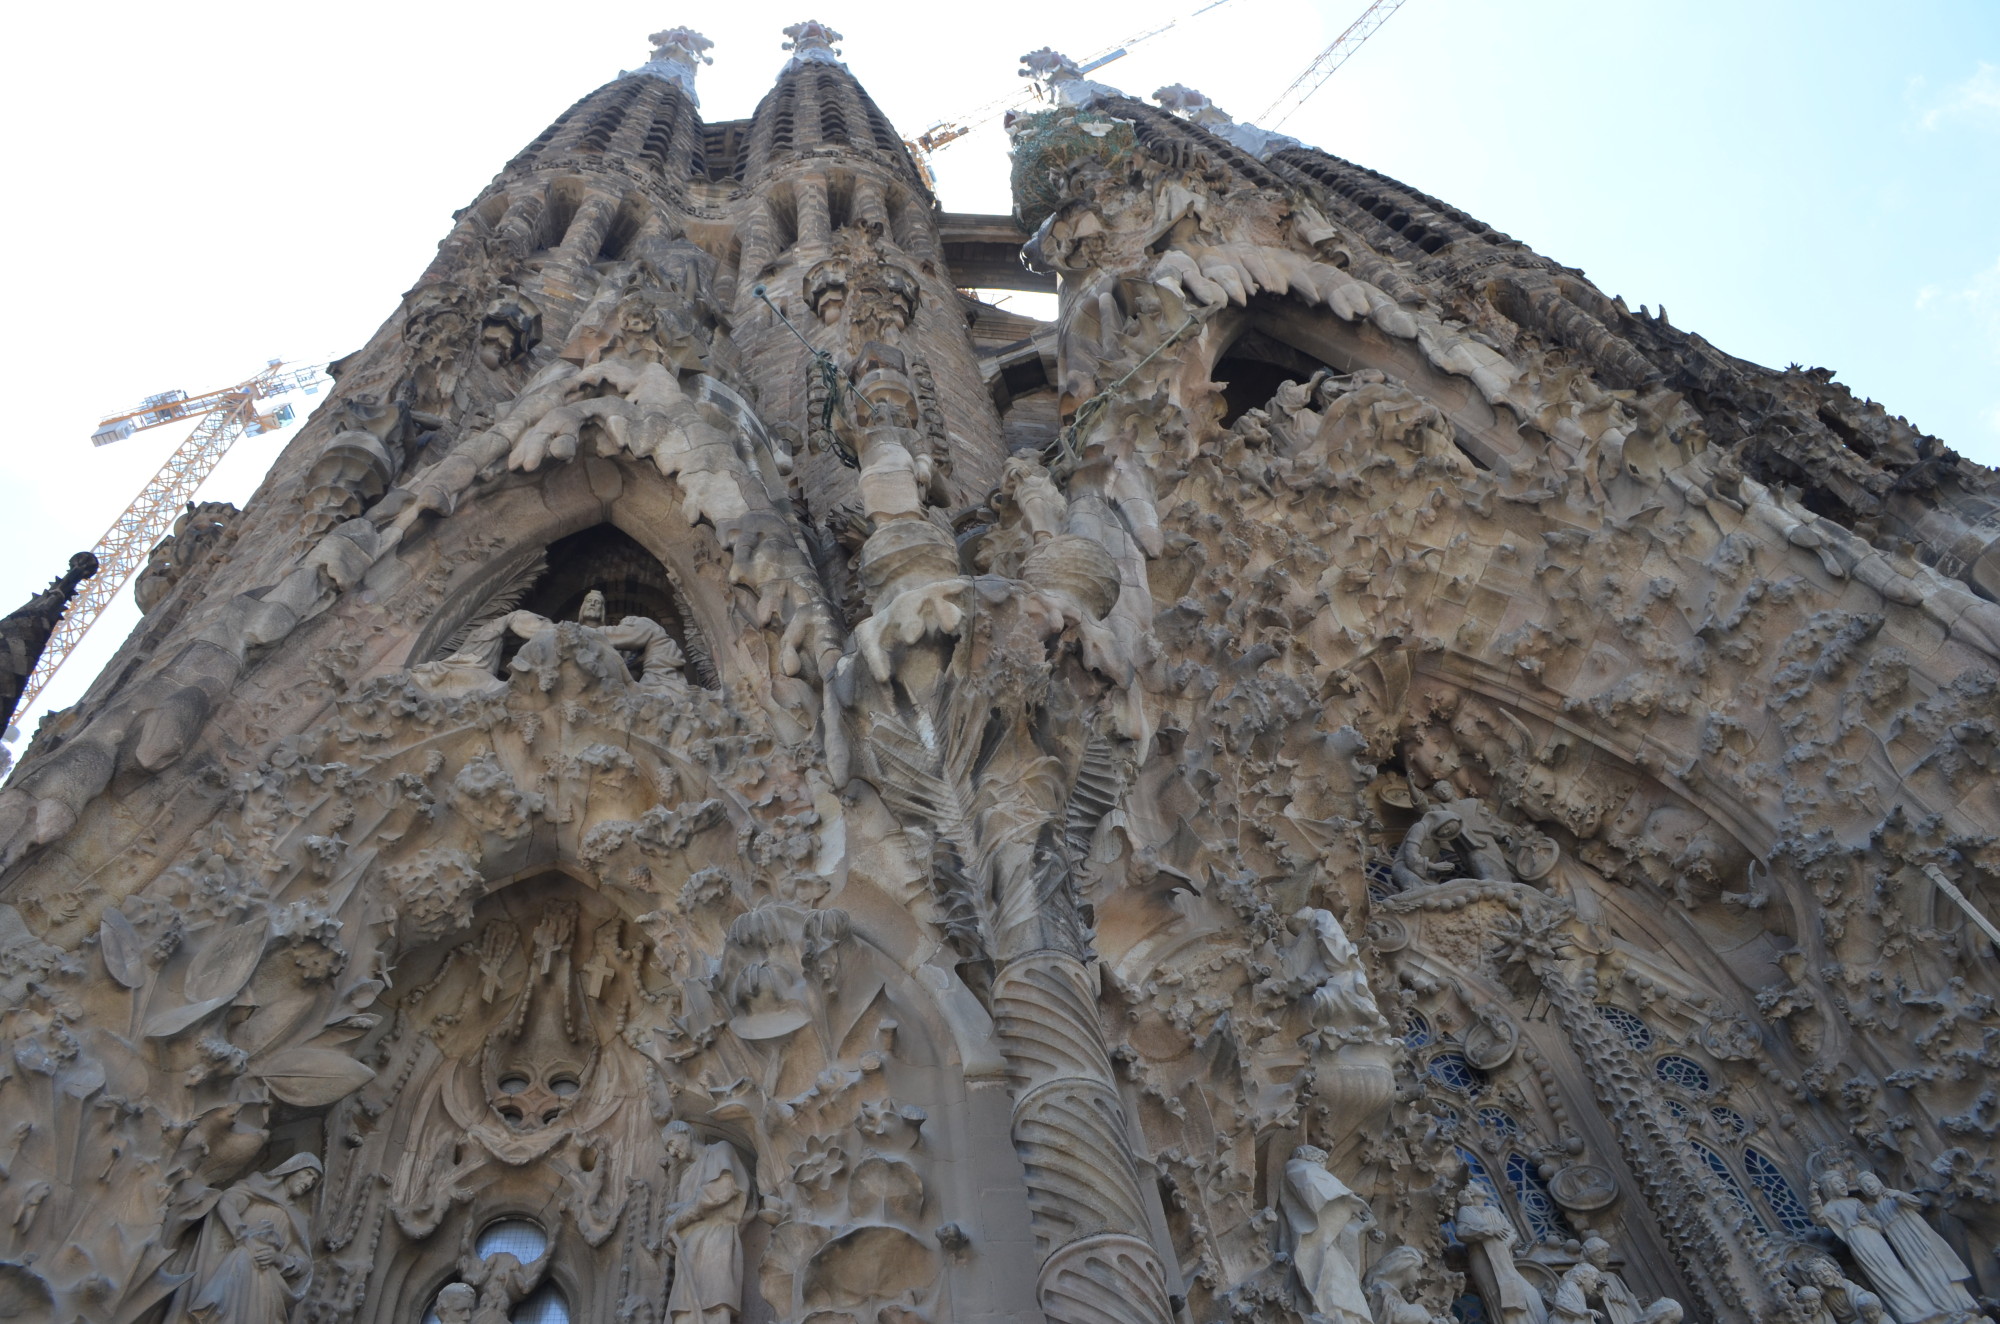 Is the Sagrada Familia worth visiting